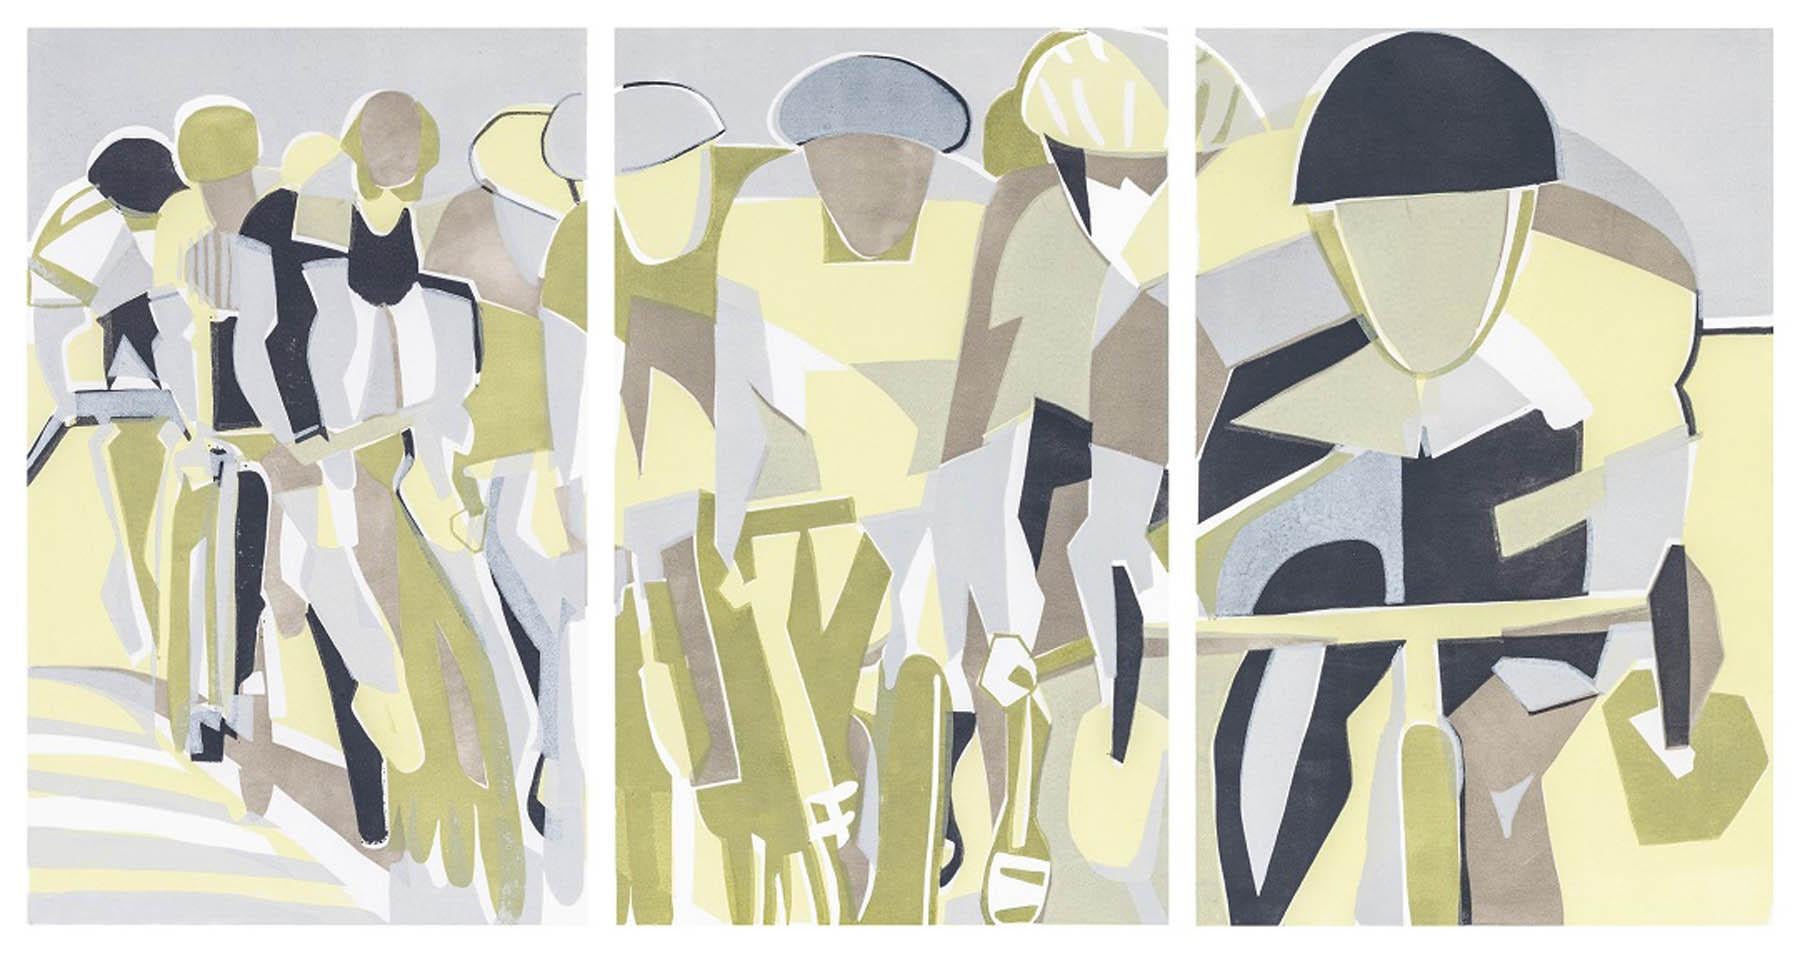 Drafting BY LISA TAKAHASHI, Cyclist Art, Sports Art, Large Scale Art, Abstract - Print by Lisa Takahashi